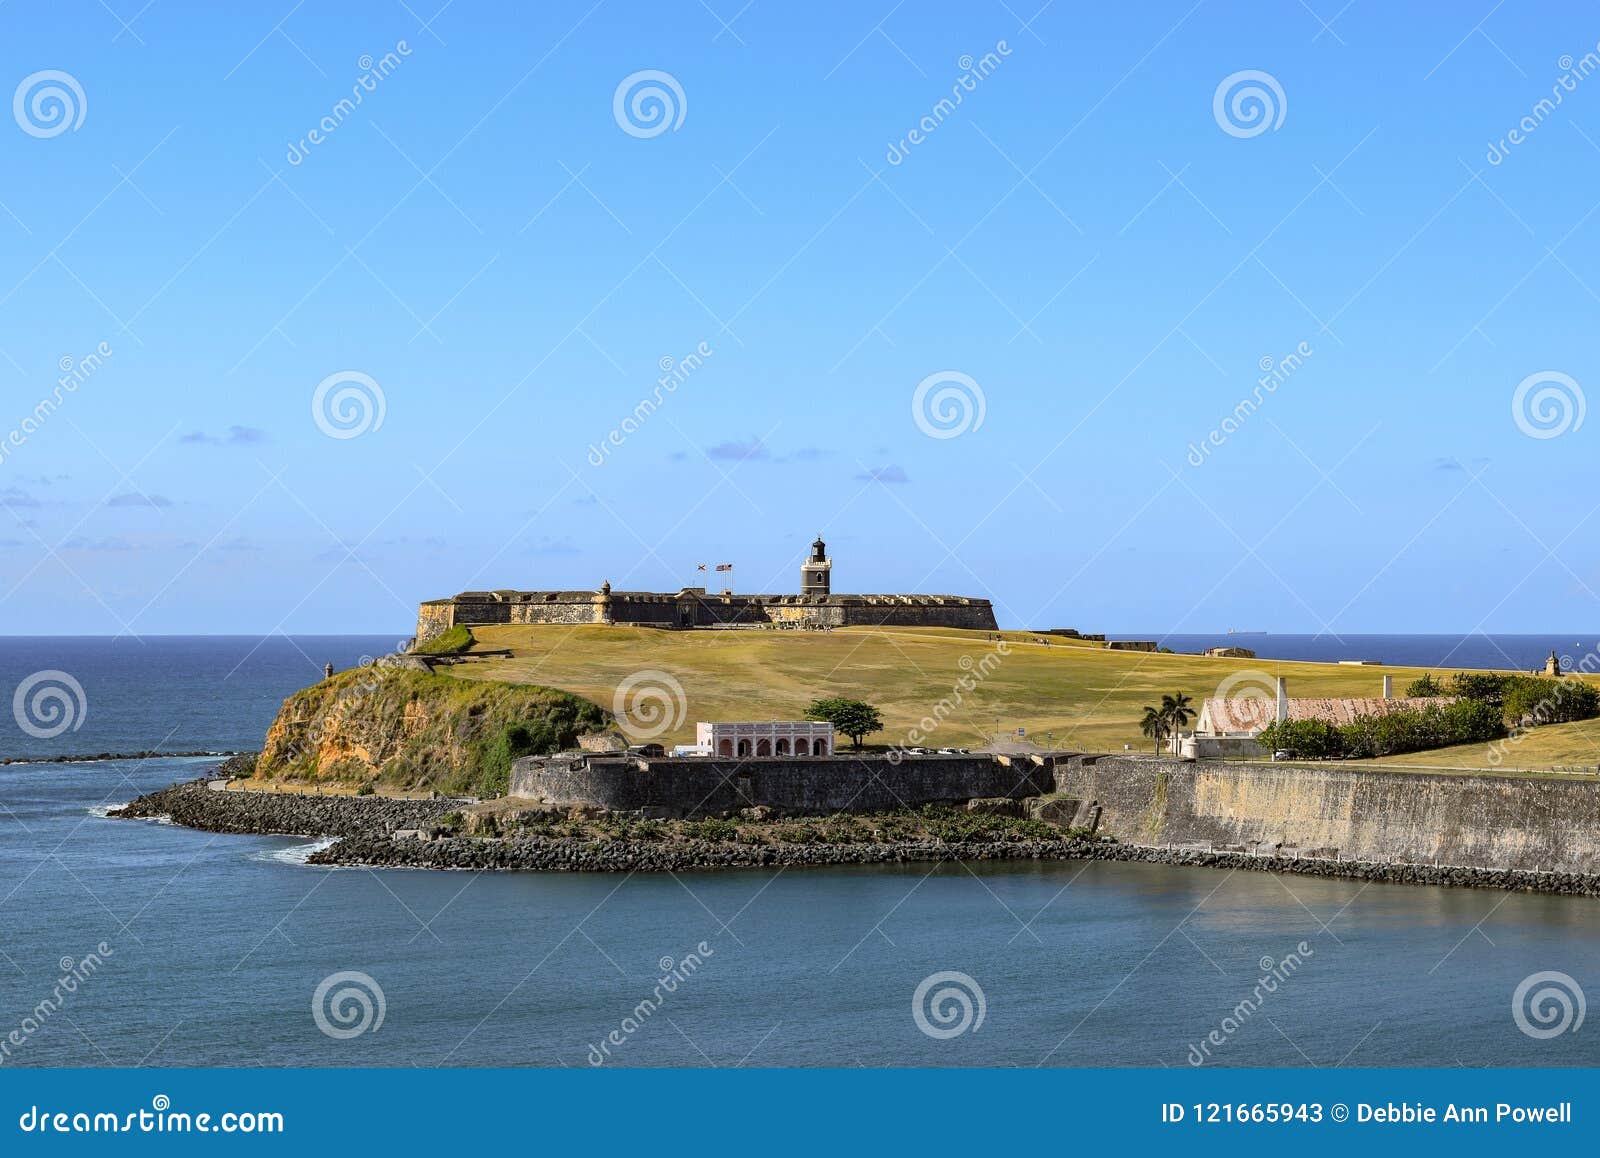 san juan, puerto rico - april 02 2014: view from the ocean of castillo san felipe del morro